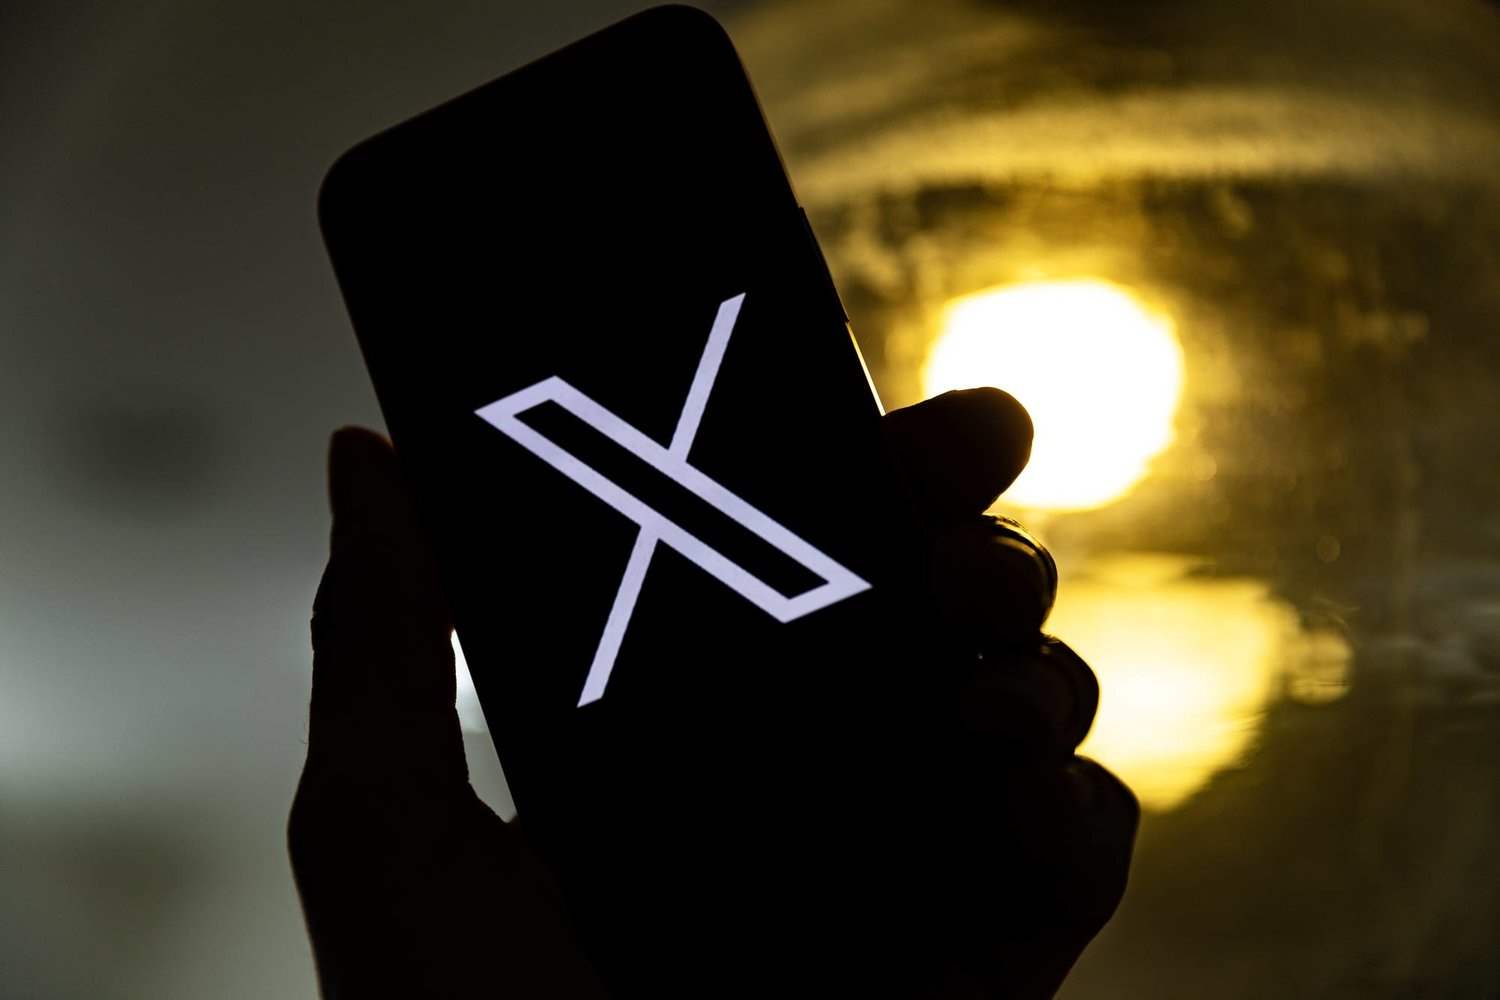  «x» تتيح إمكانية إجراء المكالمات الصوتية والمرئية للمستخدمين